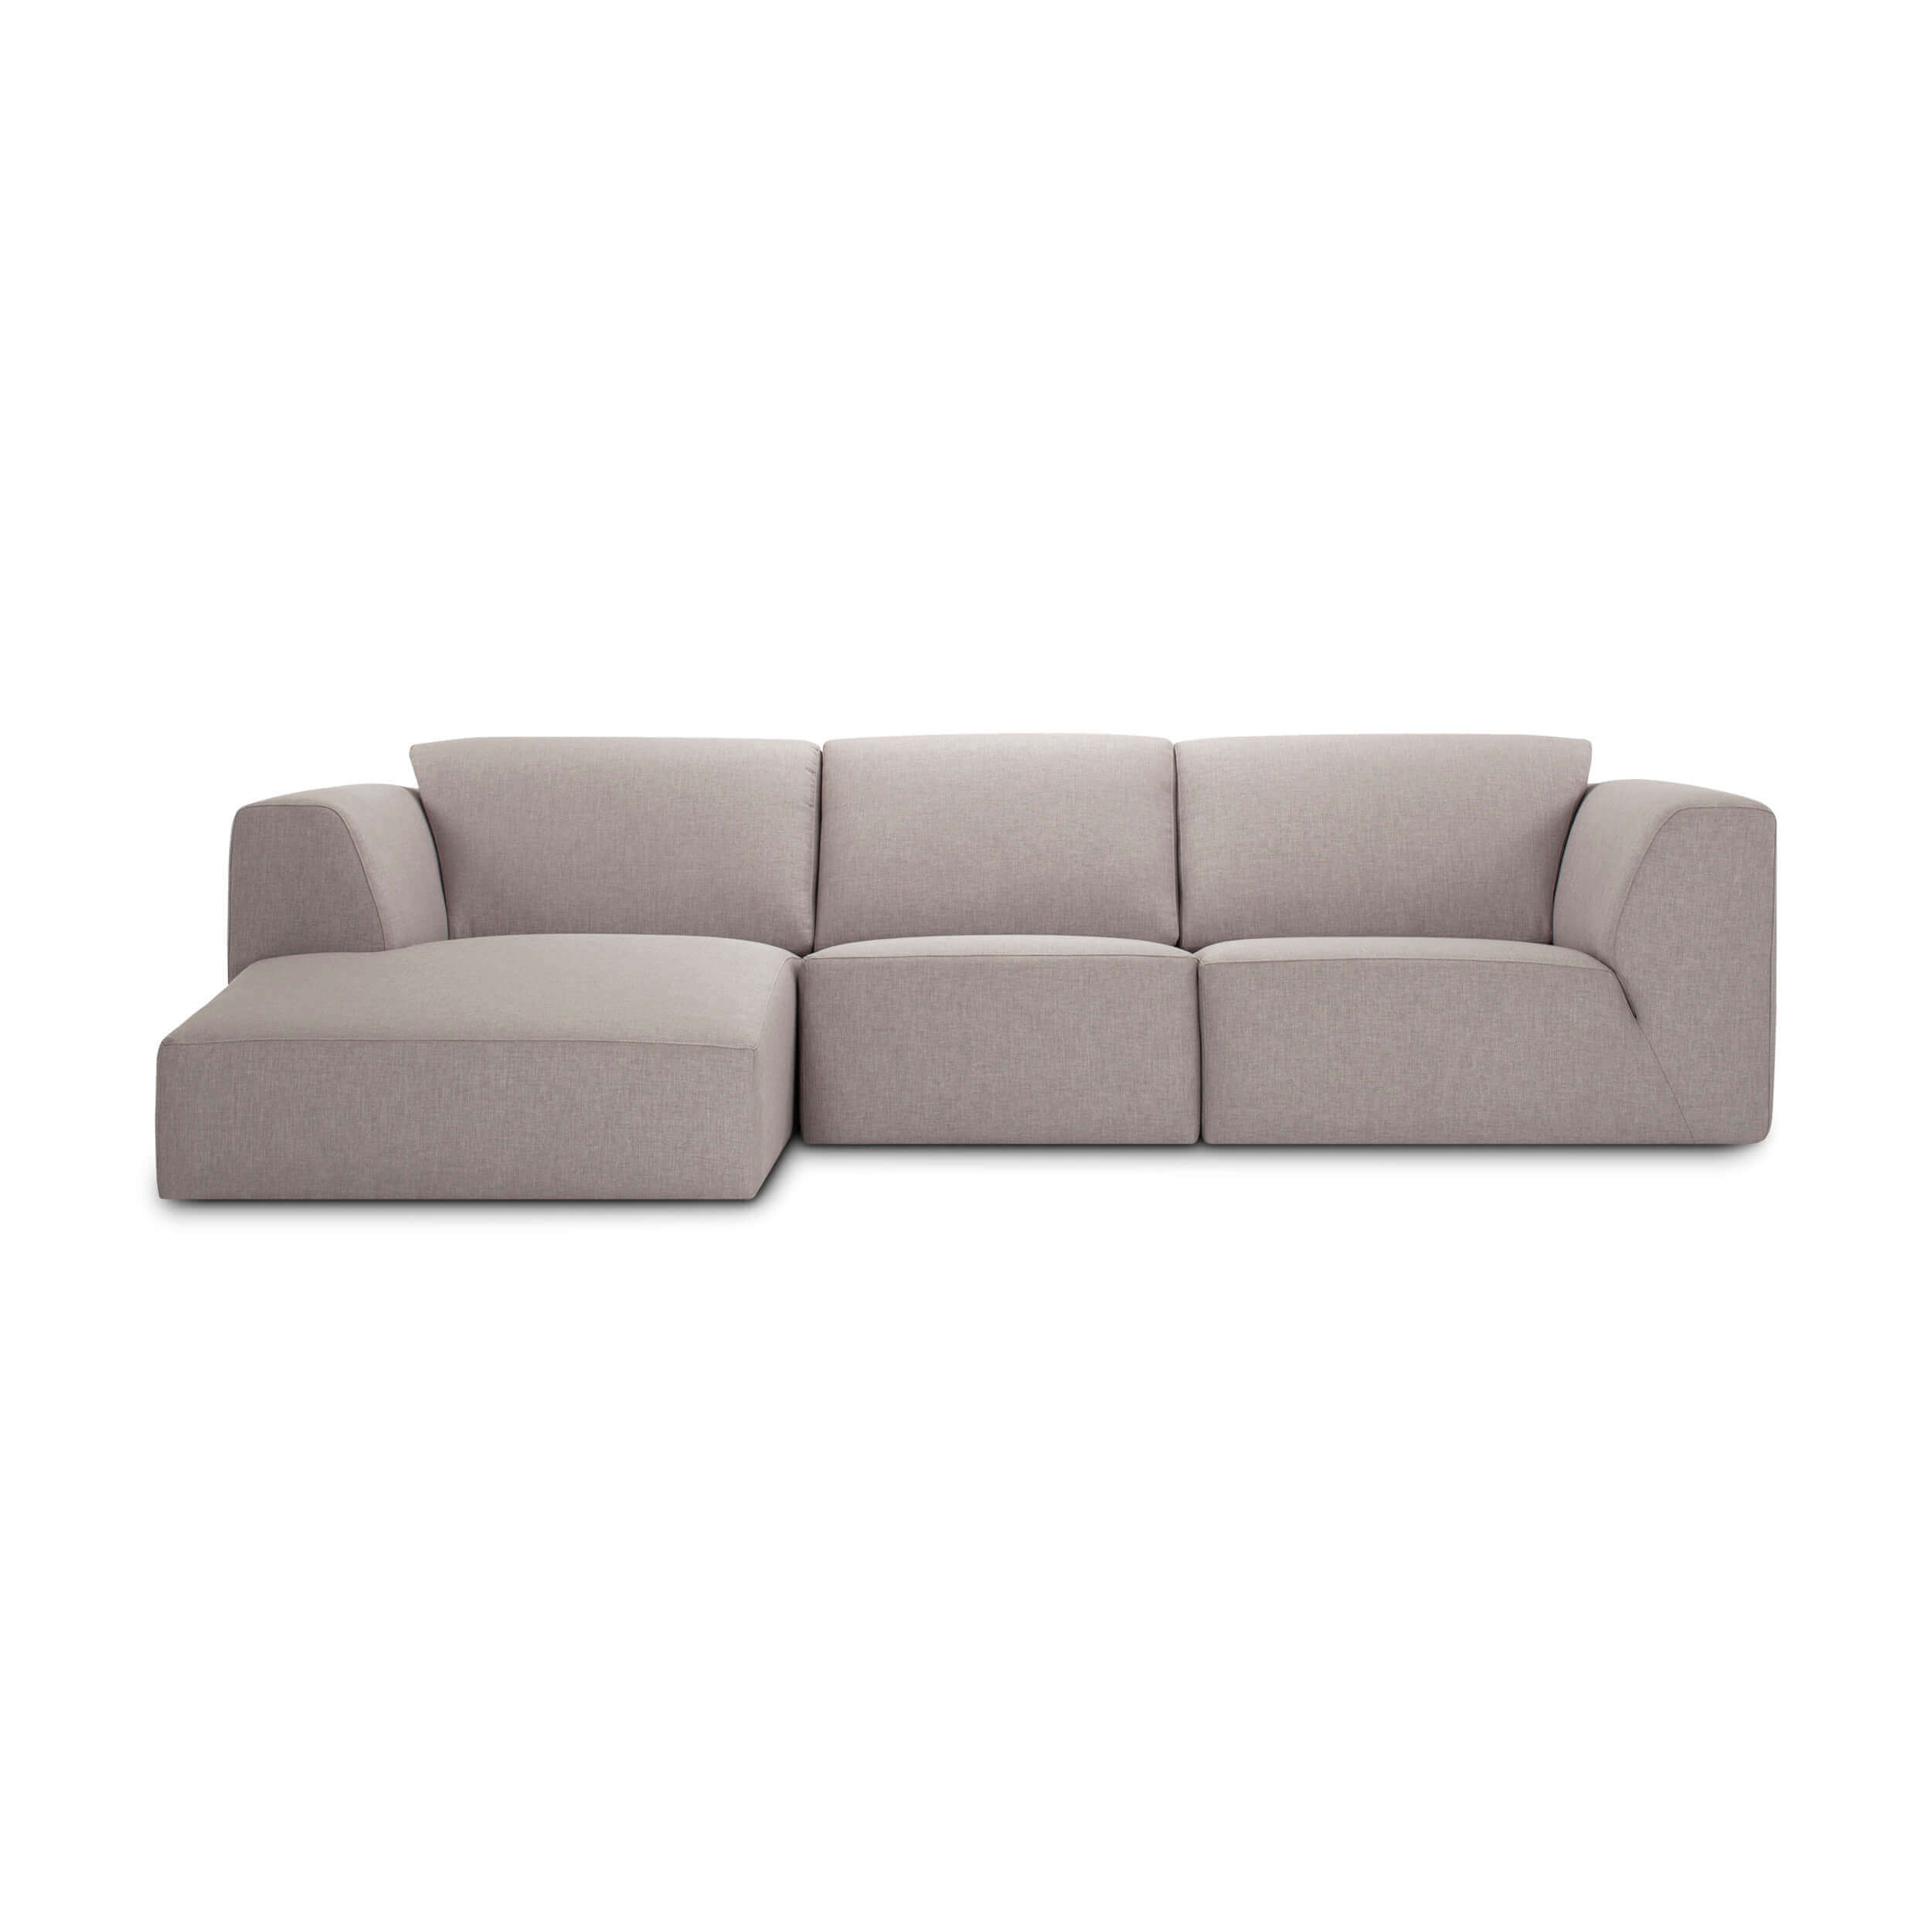 Morten Sectional Sofa | Fabric or Leather Modular Sofa